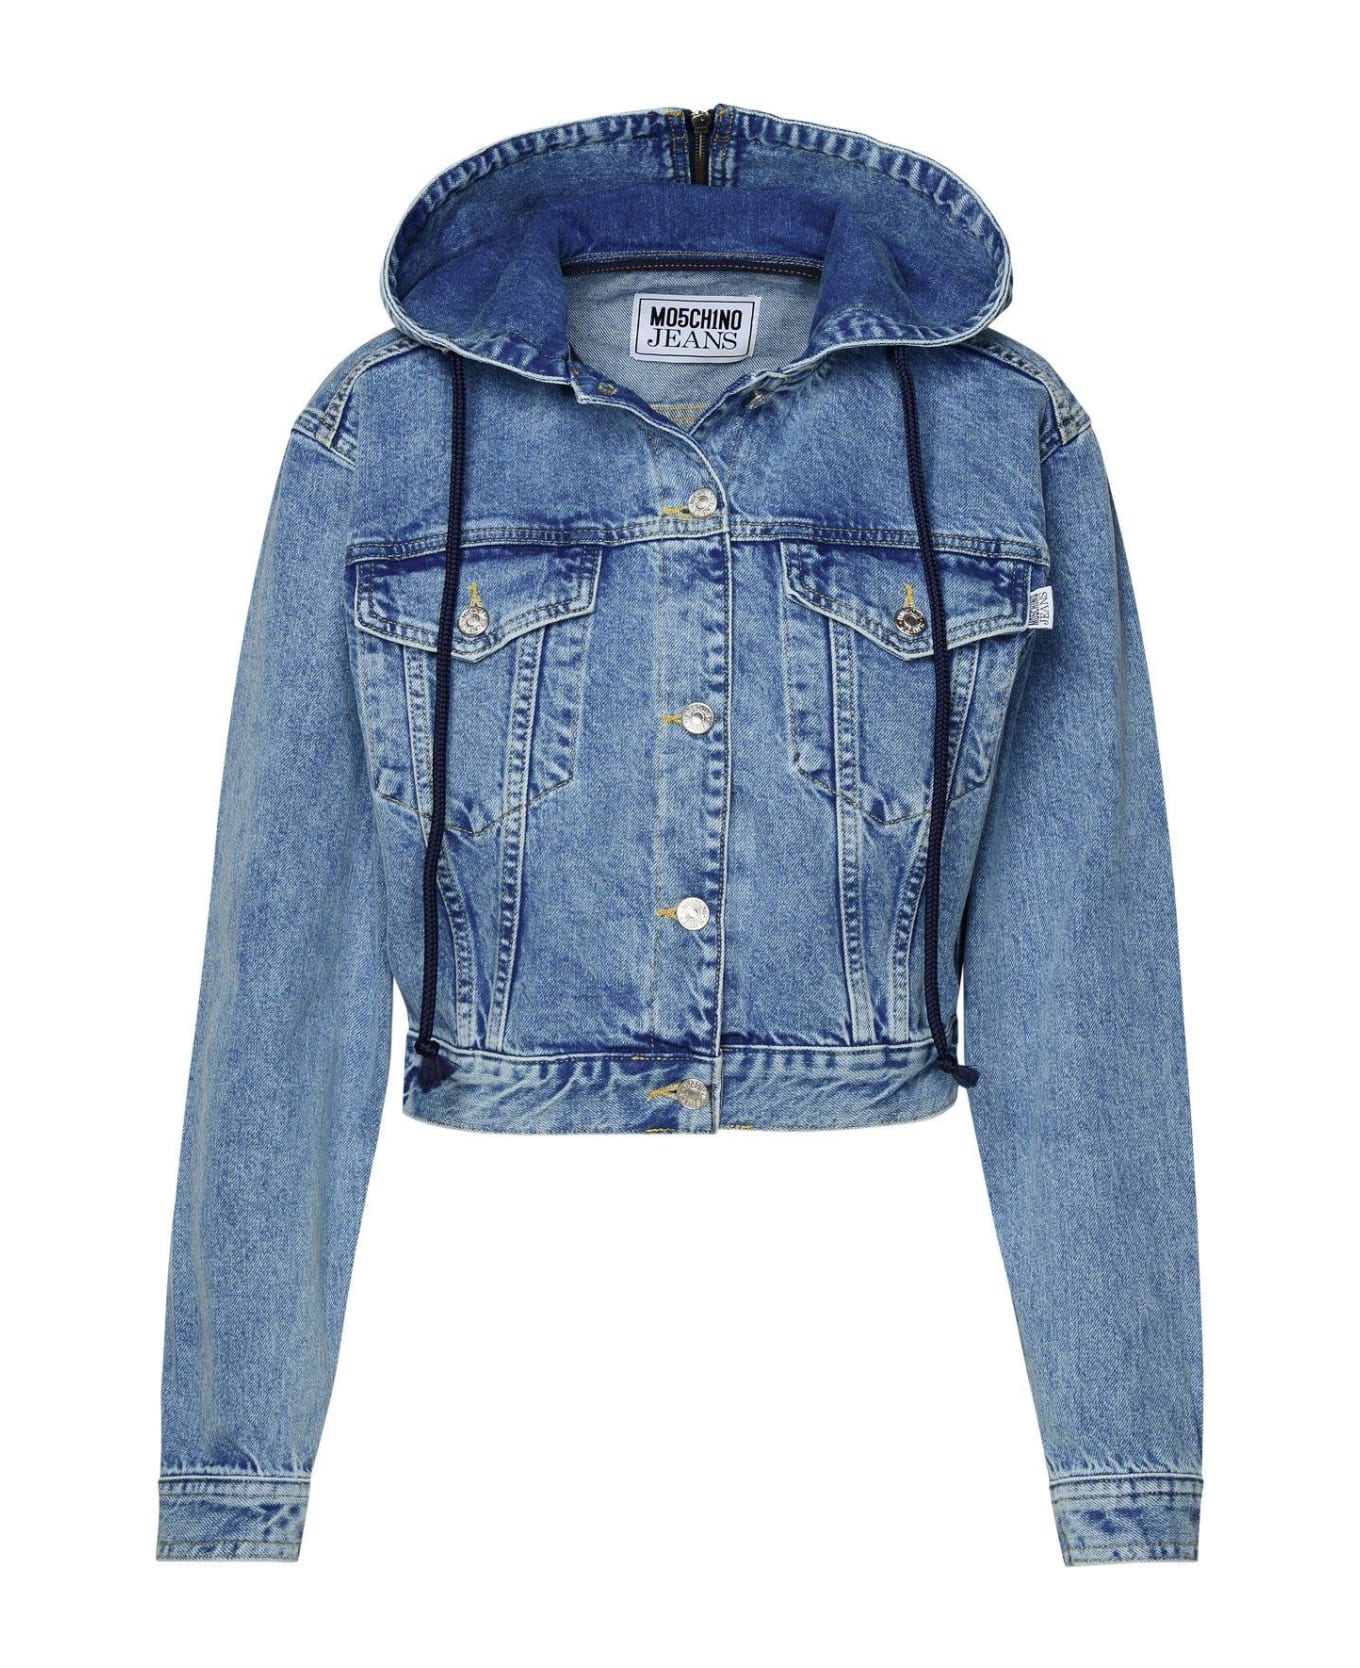 M05CH1N0 Jeans Jeans Drawstring Hooded Denim Jacket - BLUE ジャケット